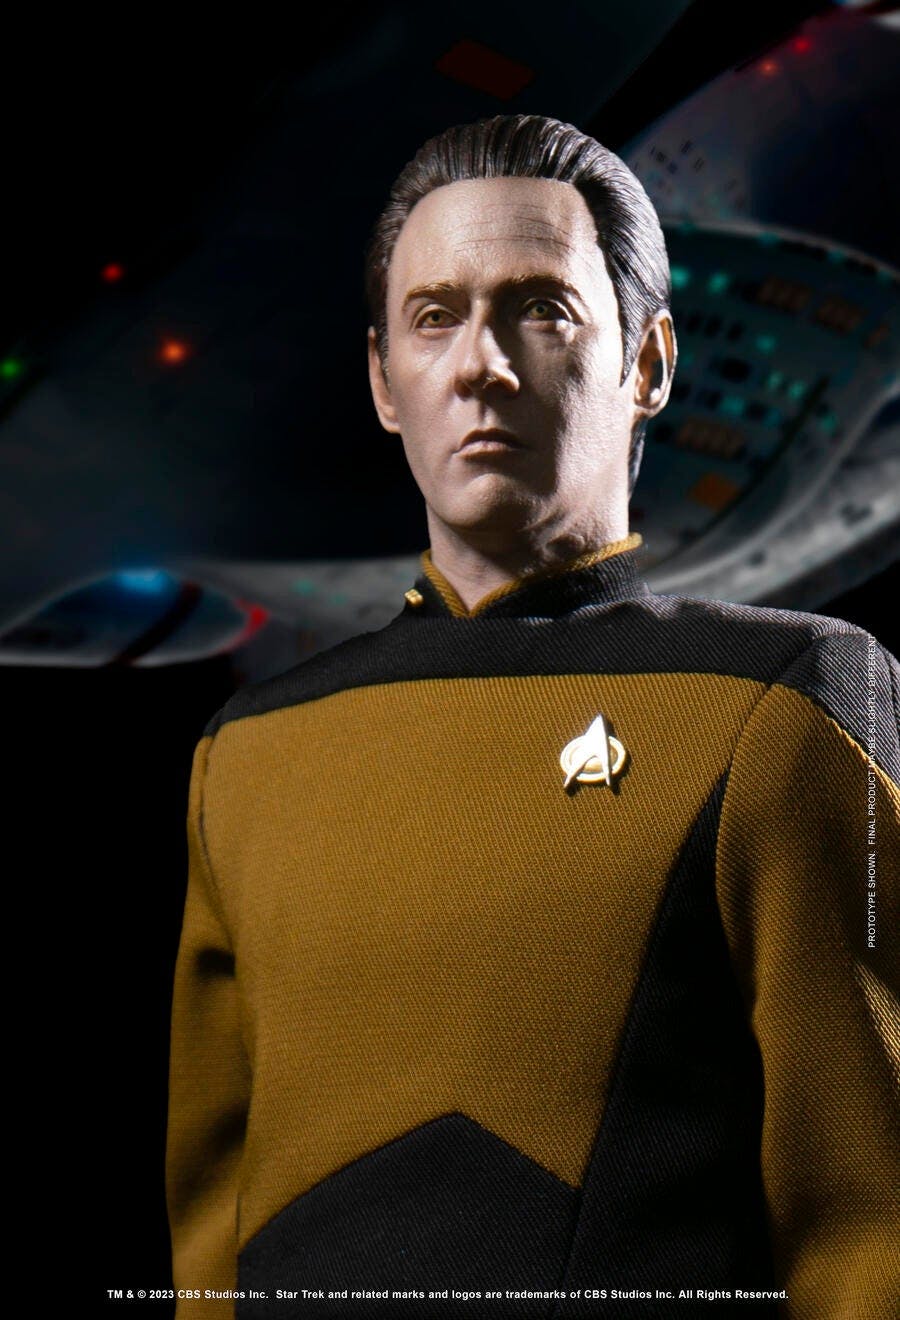 Figurine Star Trek: The Next Generation - Data